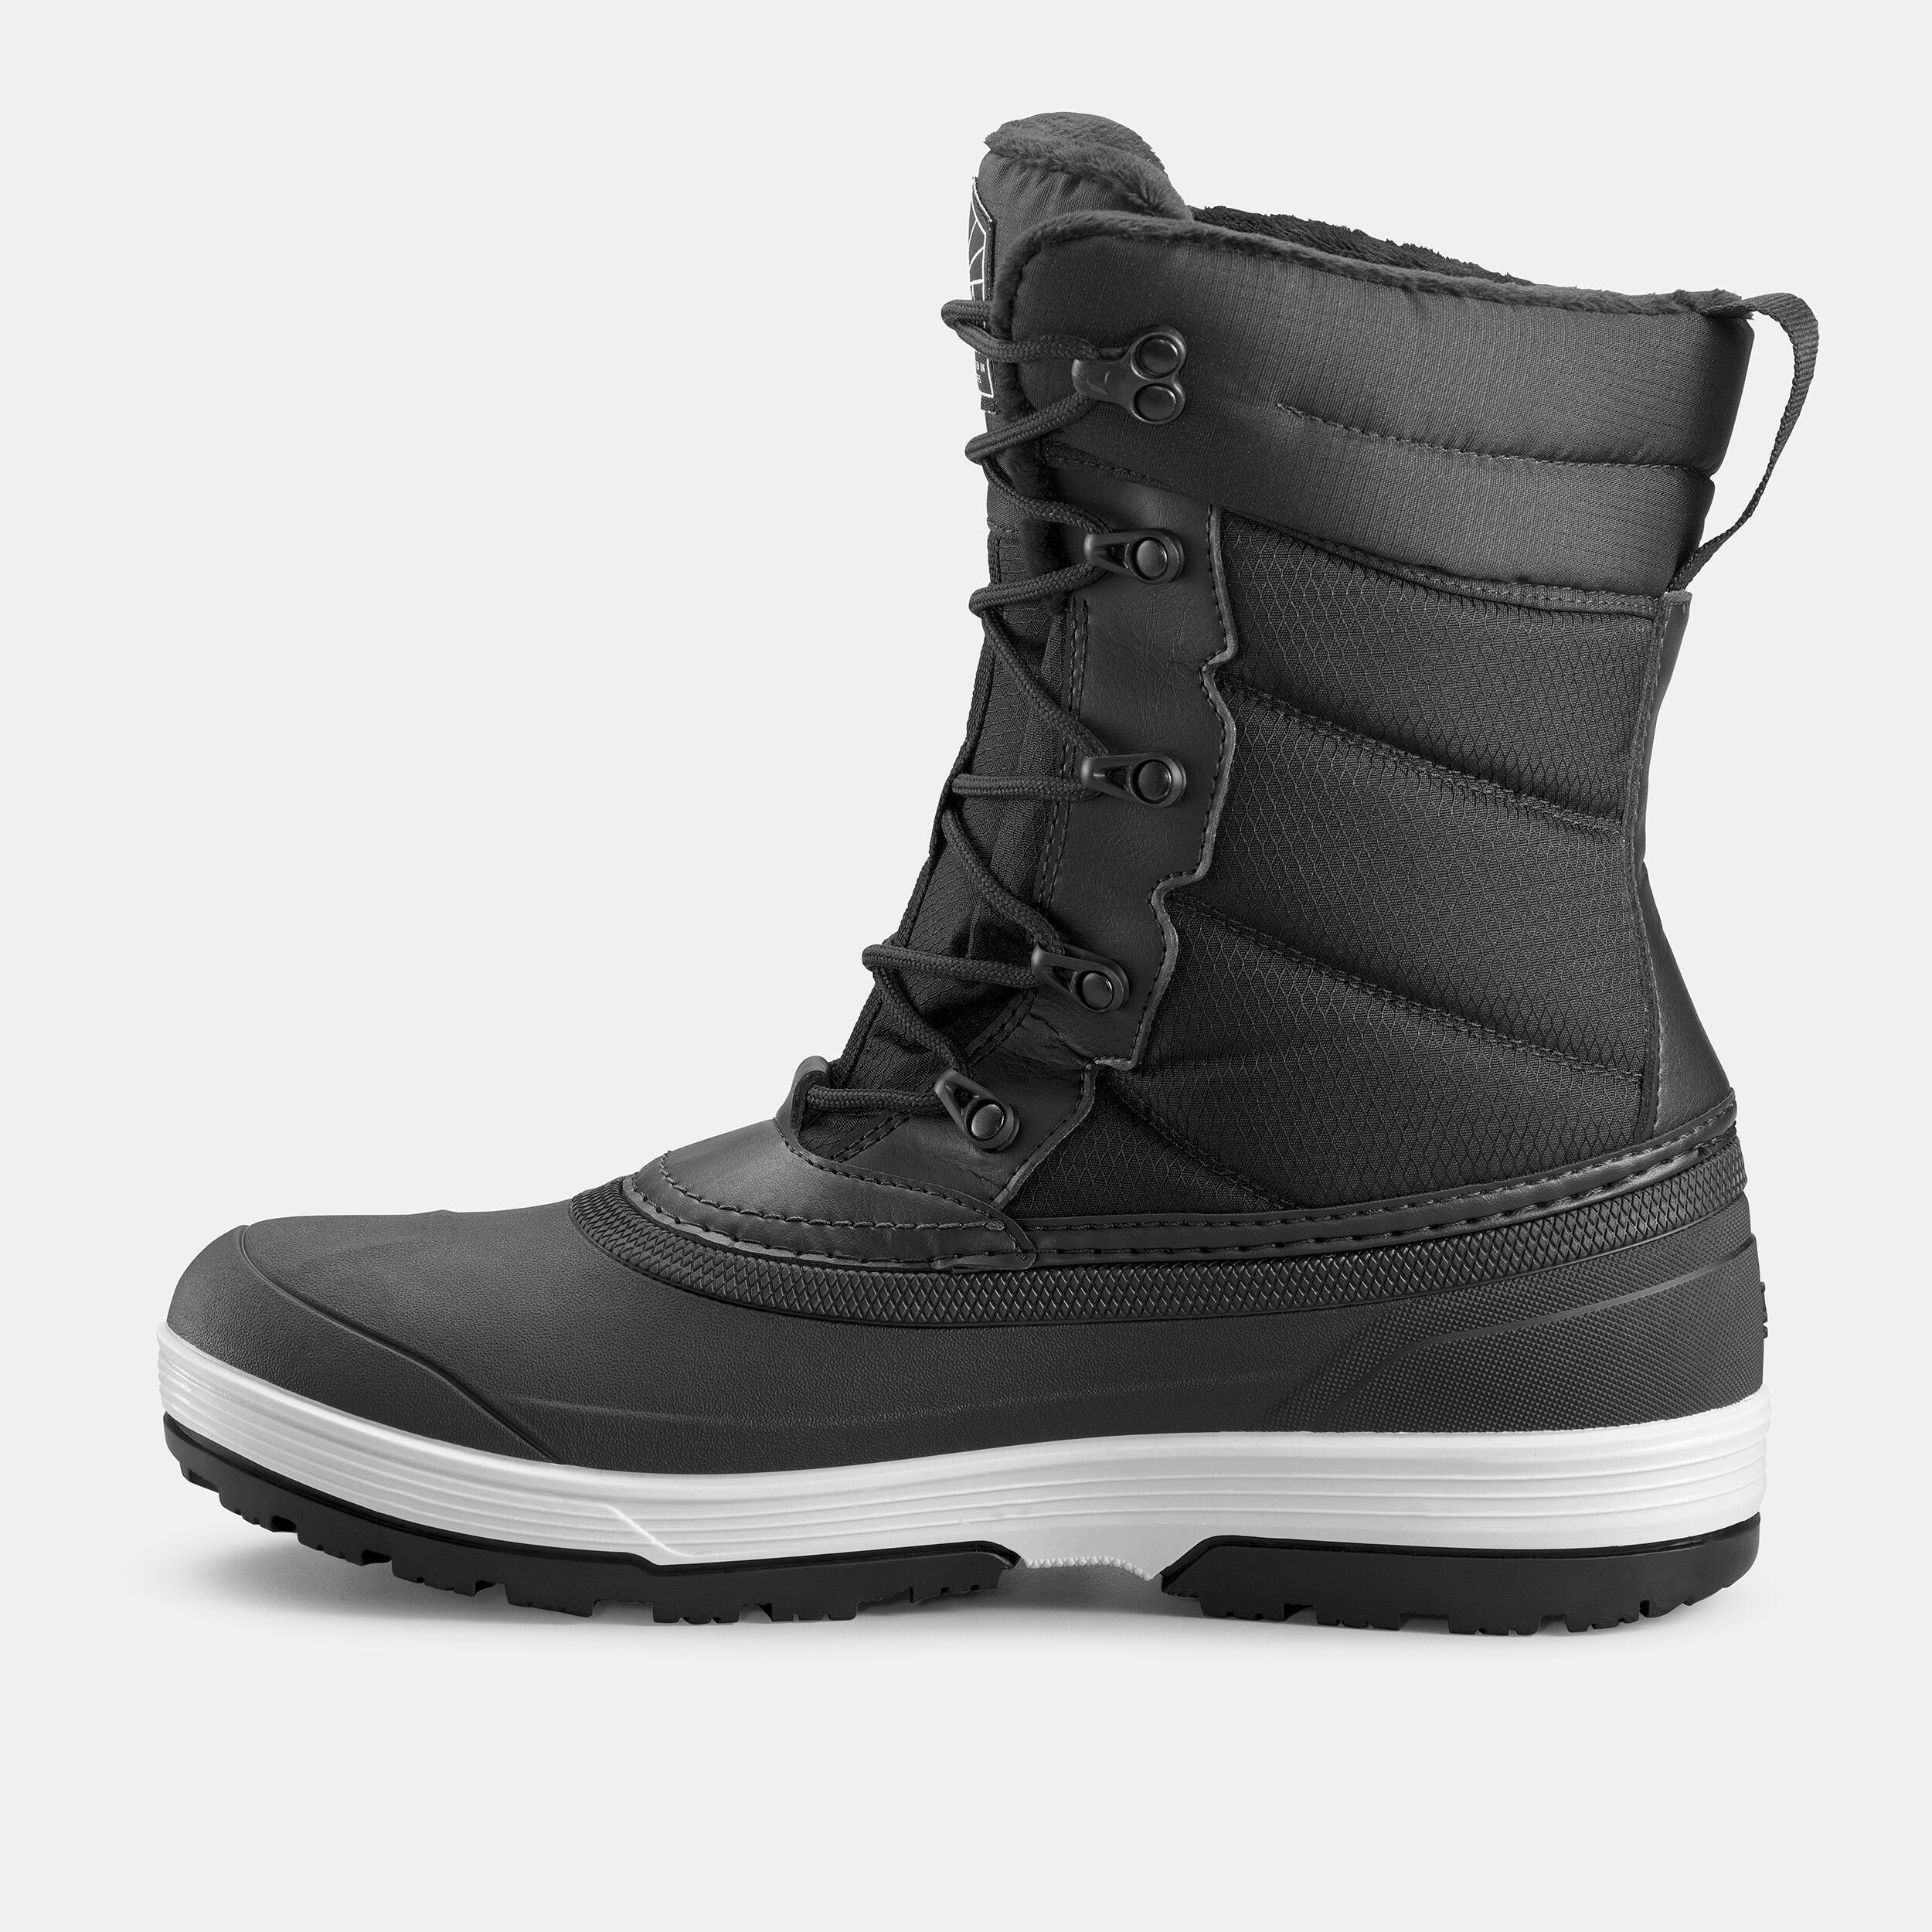 Men’s Warm Waterproof Snow Hiking Boots  - SH500 X- WARM - Lace 5/8